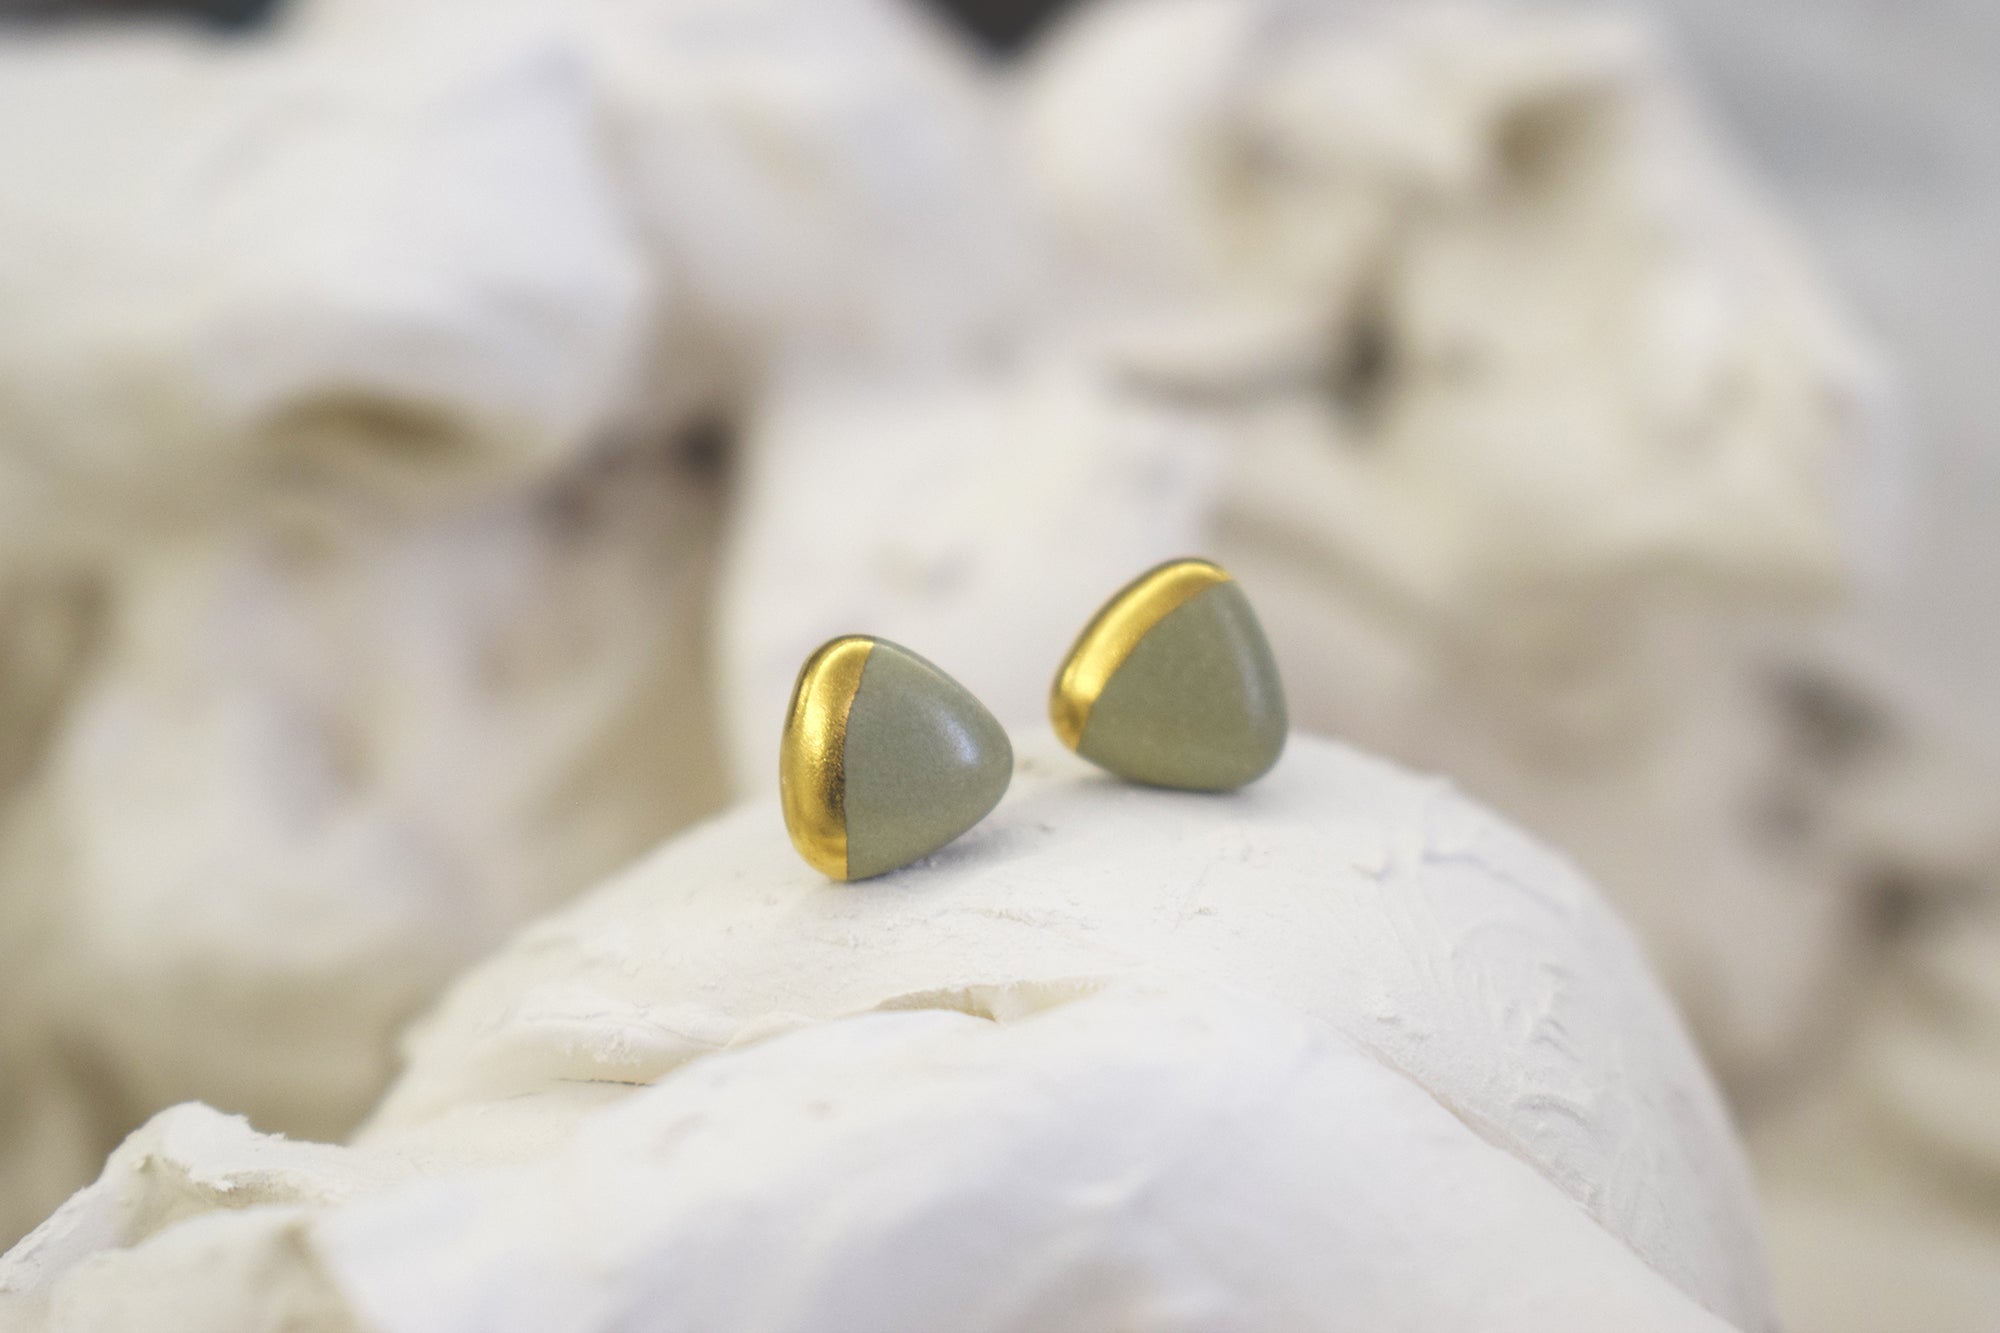 Porcelain earrings #105 + colors